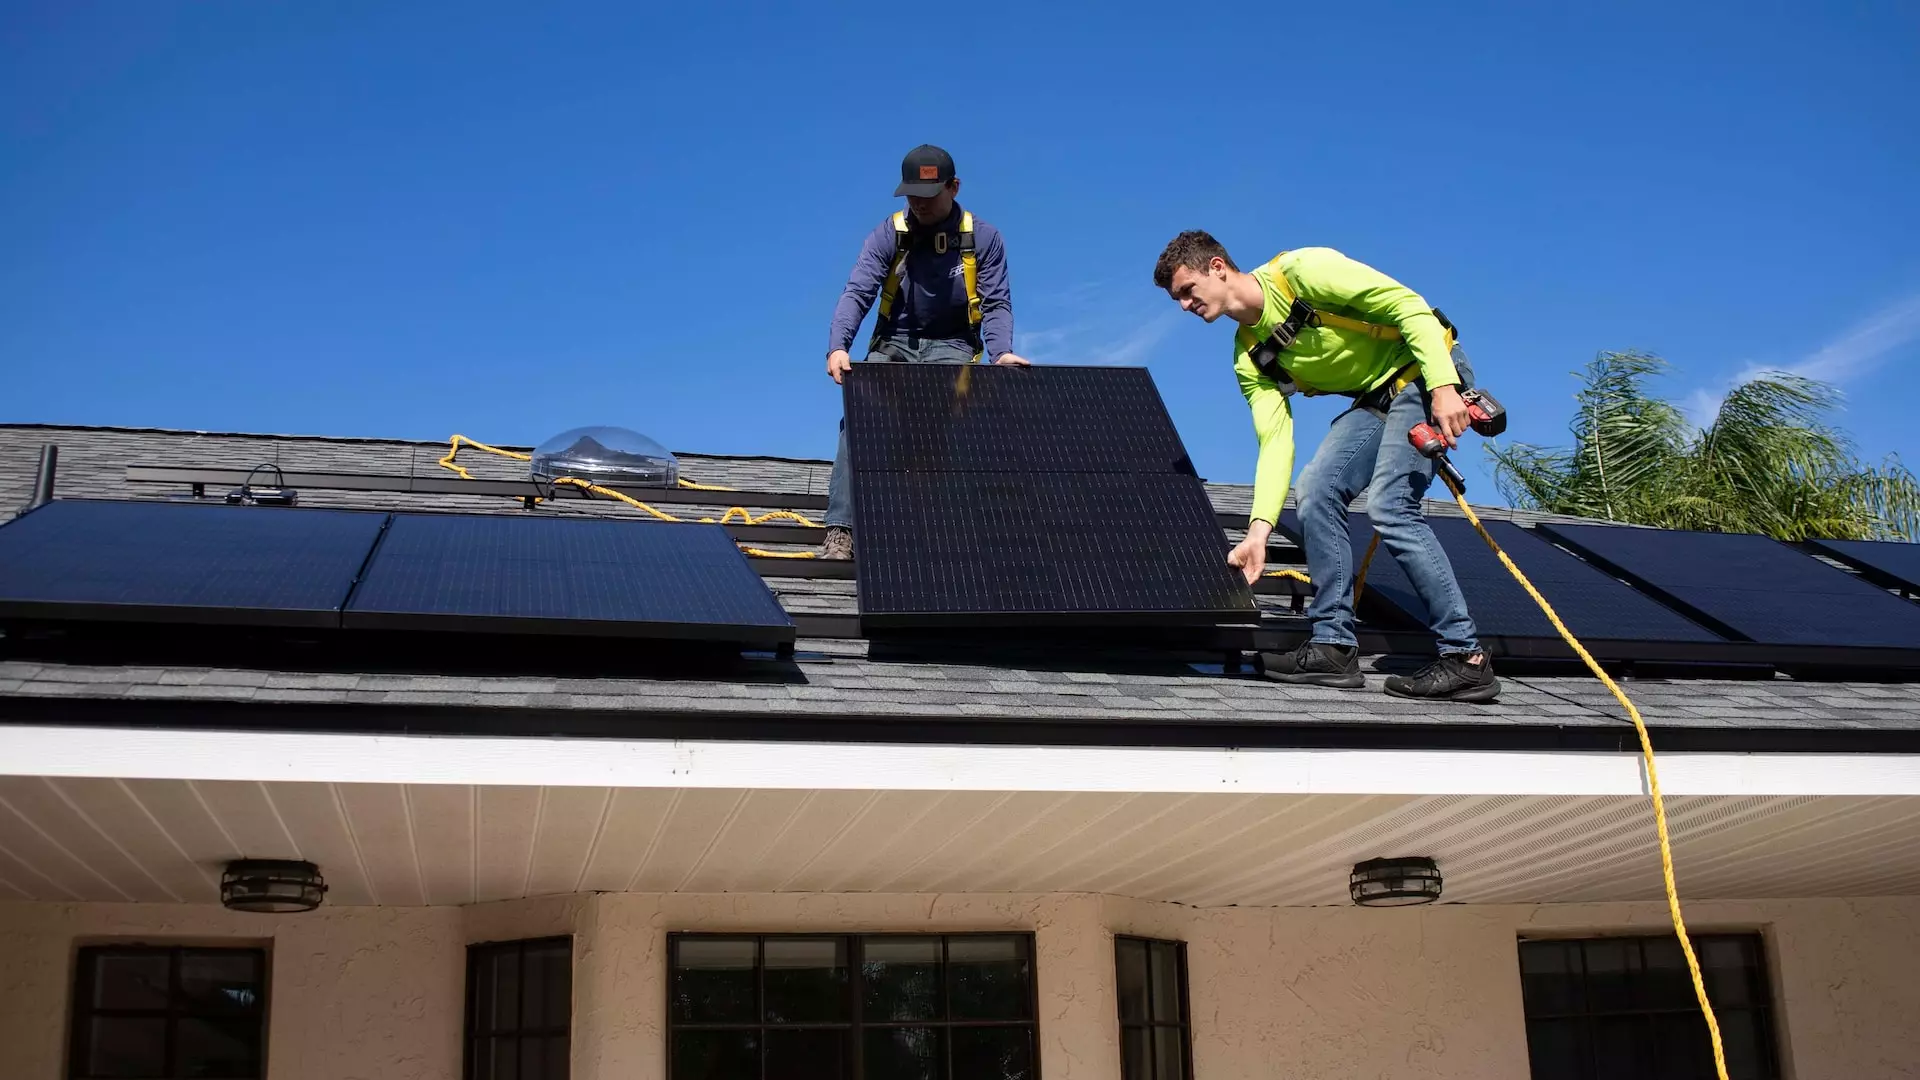 roofers installing solar